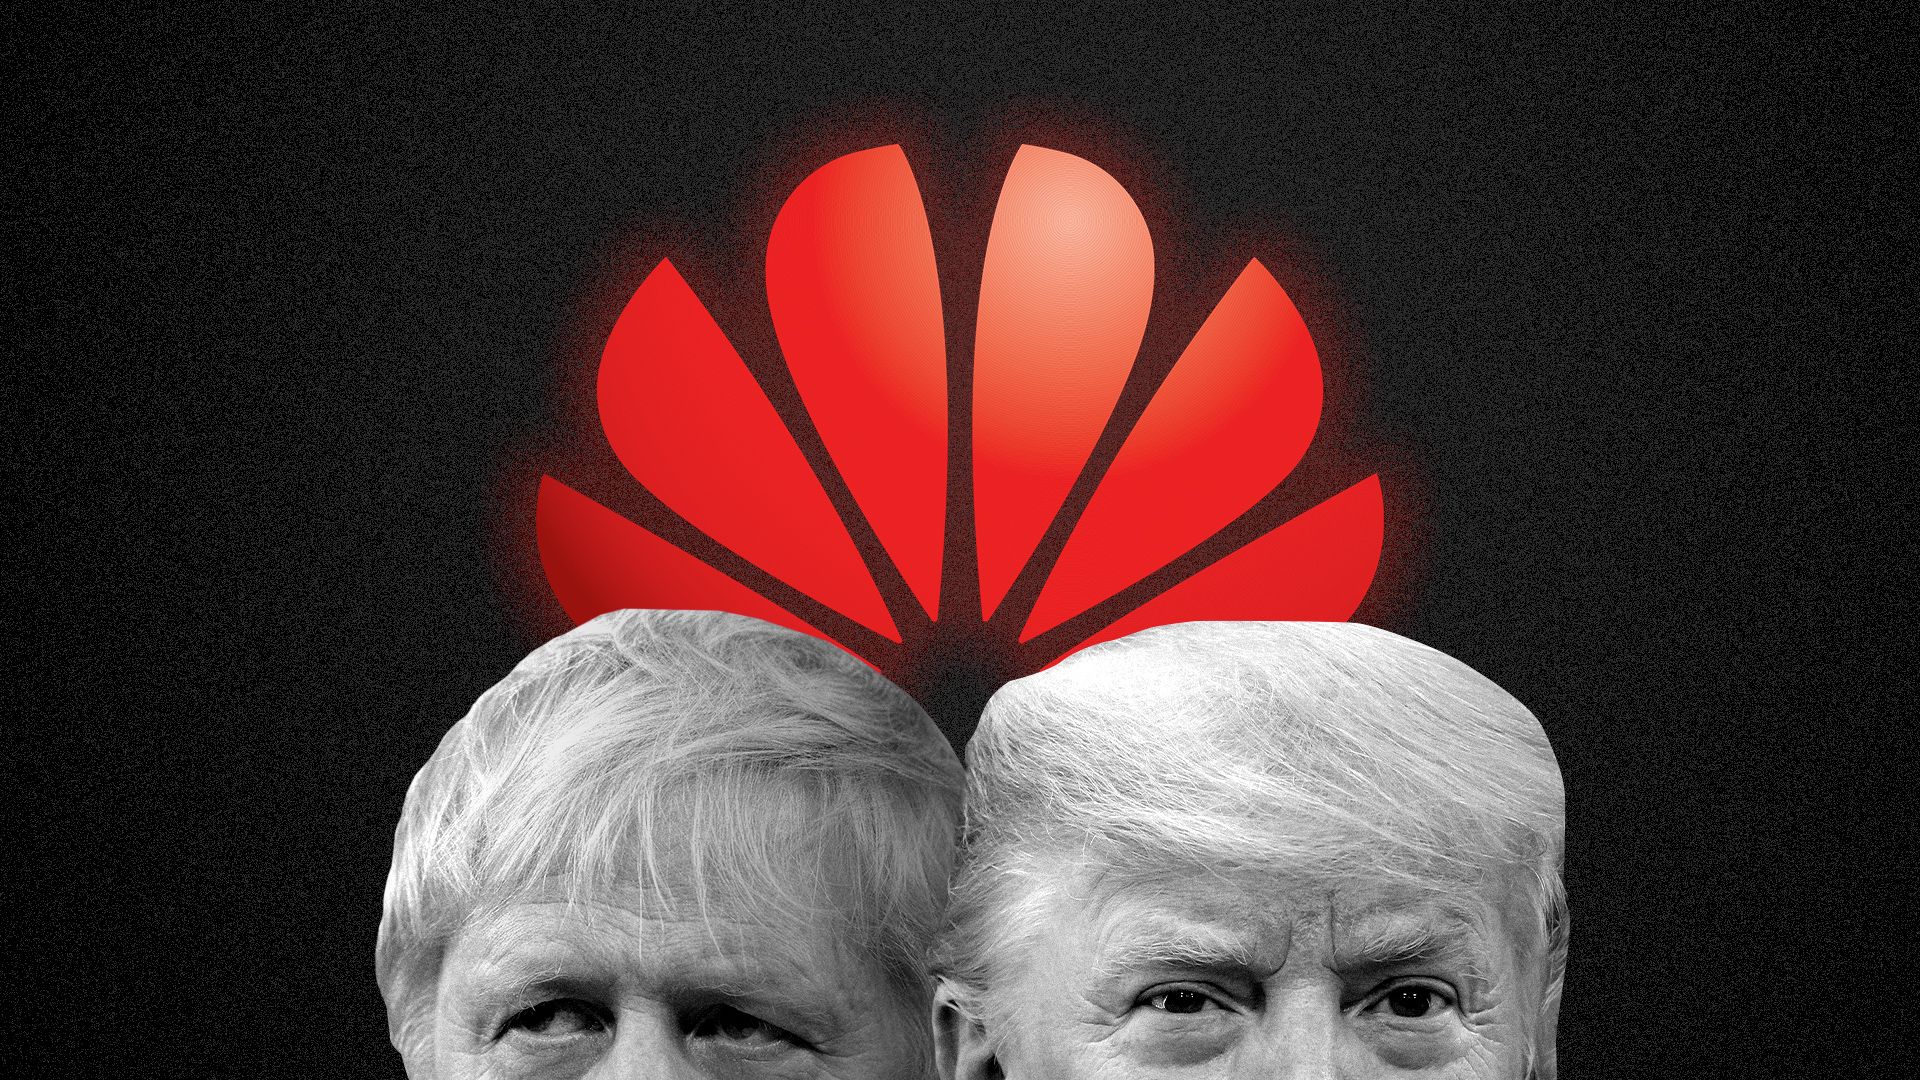 Photo illustration of President Donald Trump and Prime Minister Boris Johnson under Huawei's logo.